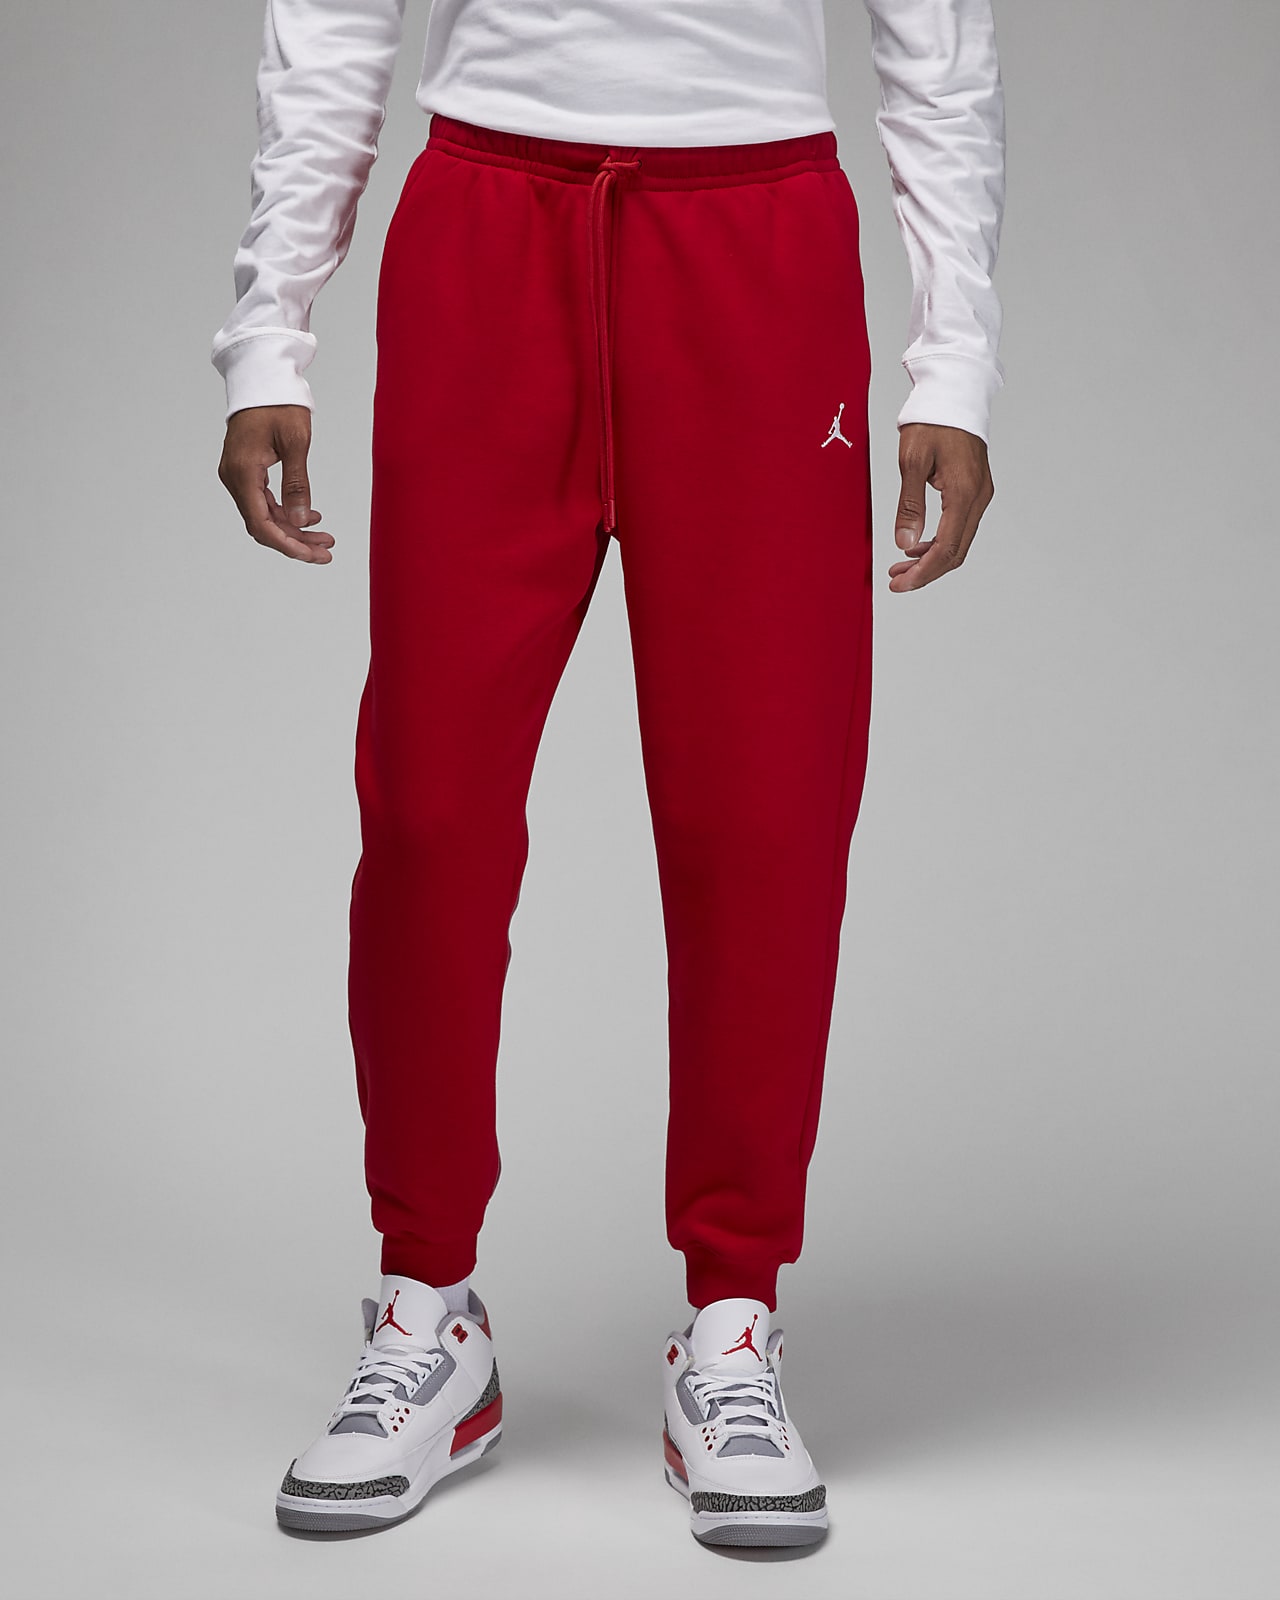 Jogging jordan jumpman sport rouge homme - Nike